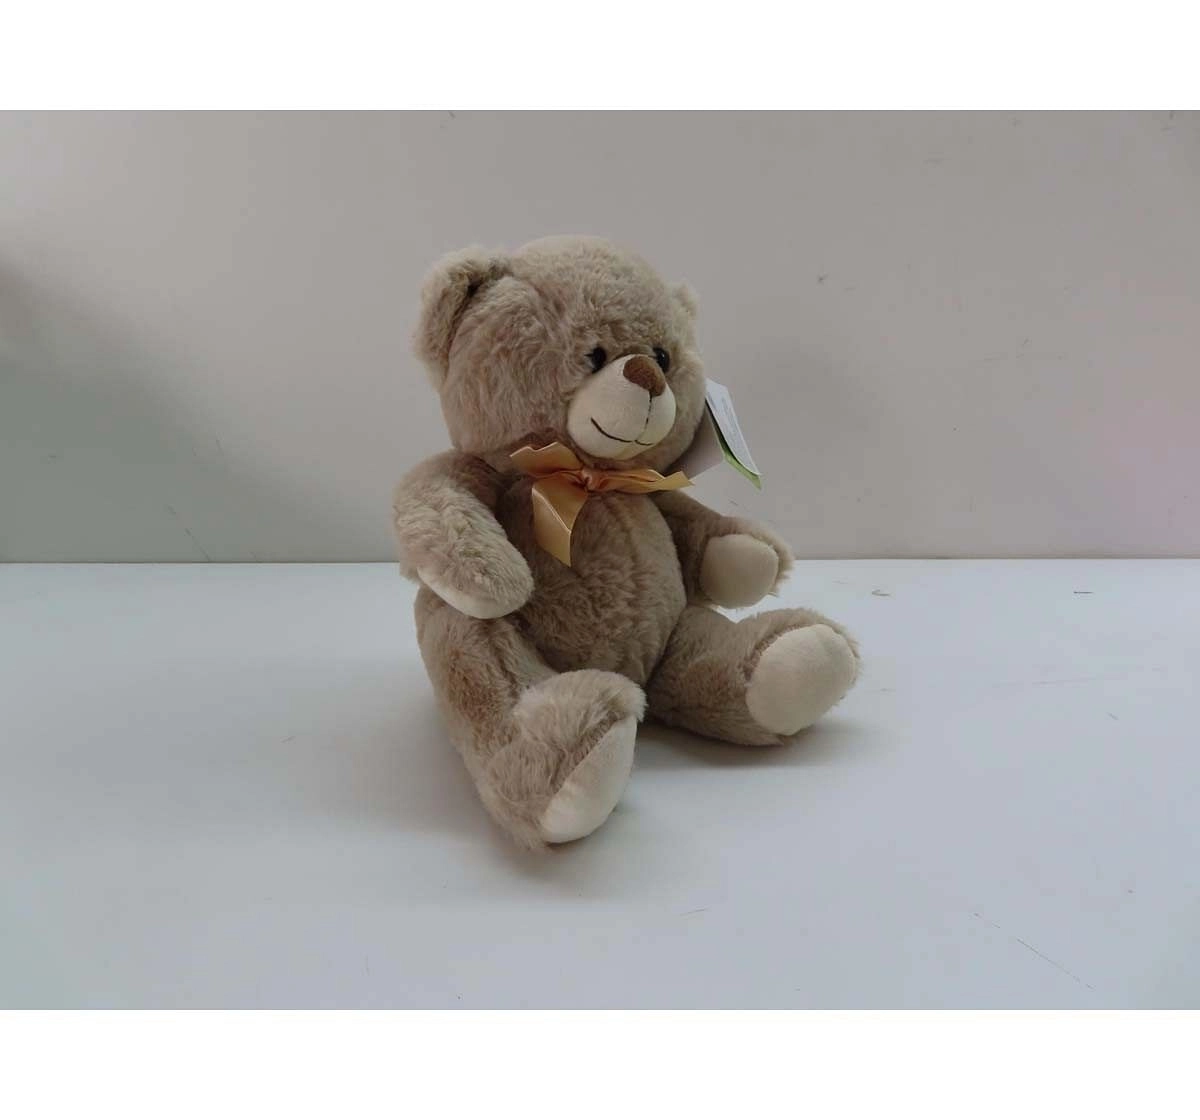 Qingdao Sitting Bear Light Brown, 27Cm Teddy Bears for Kids Age 0M+ - 27 Cm (Brown)